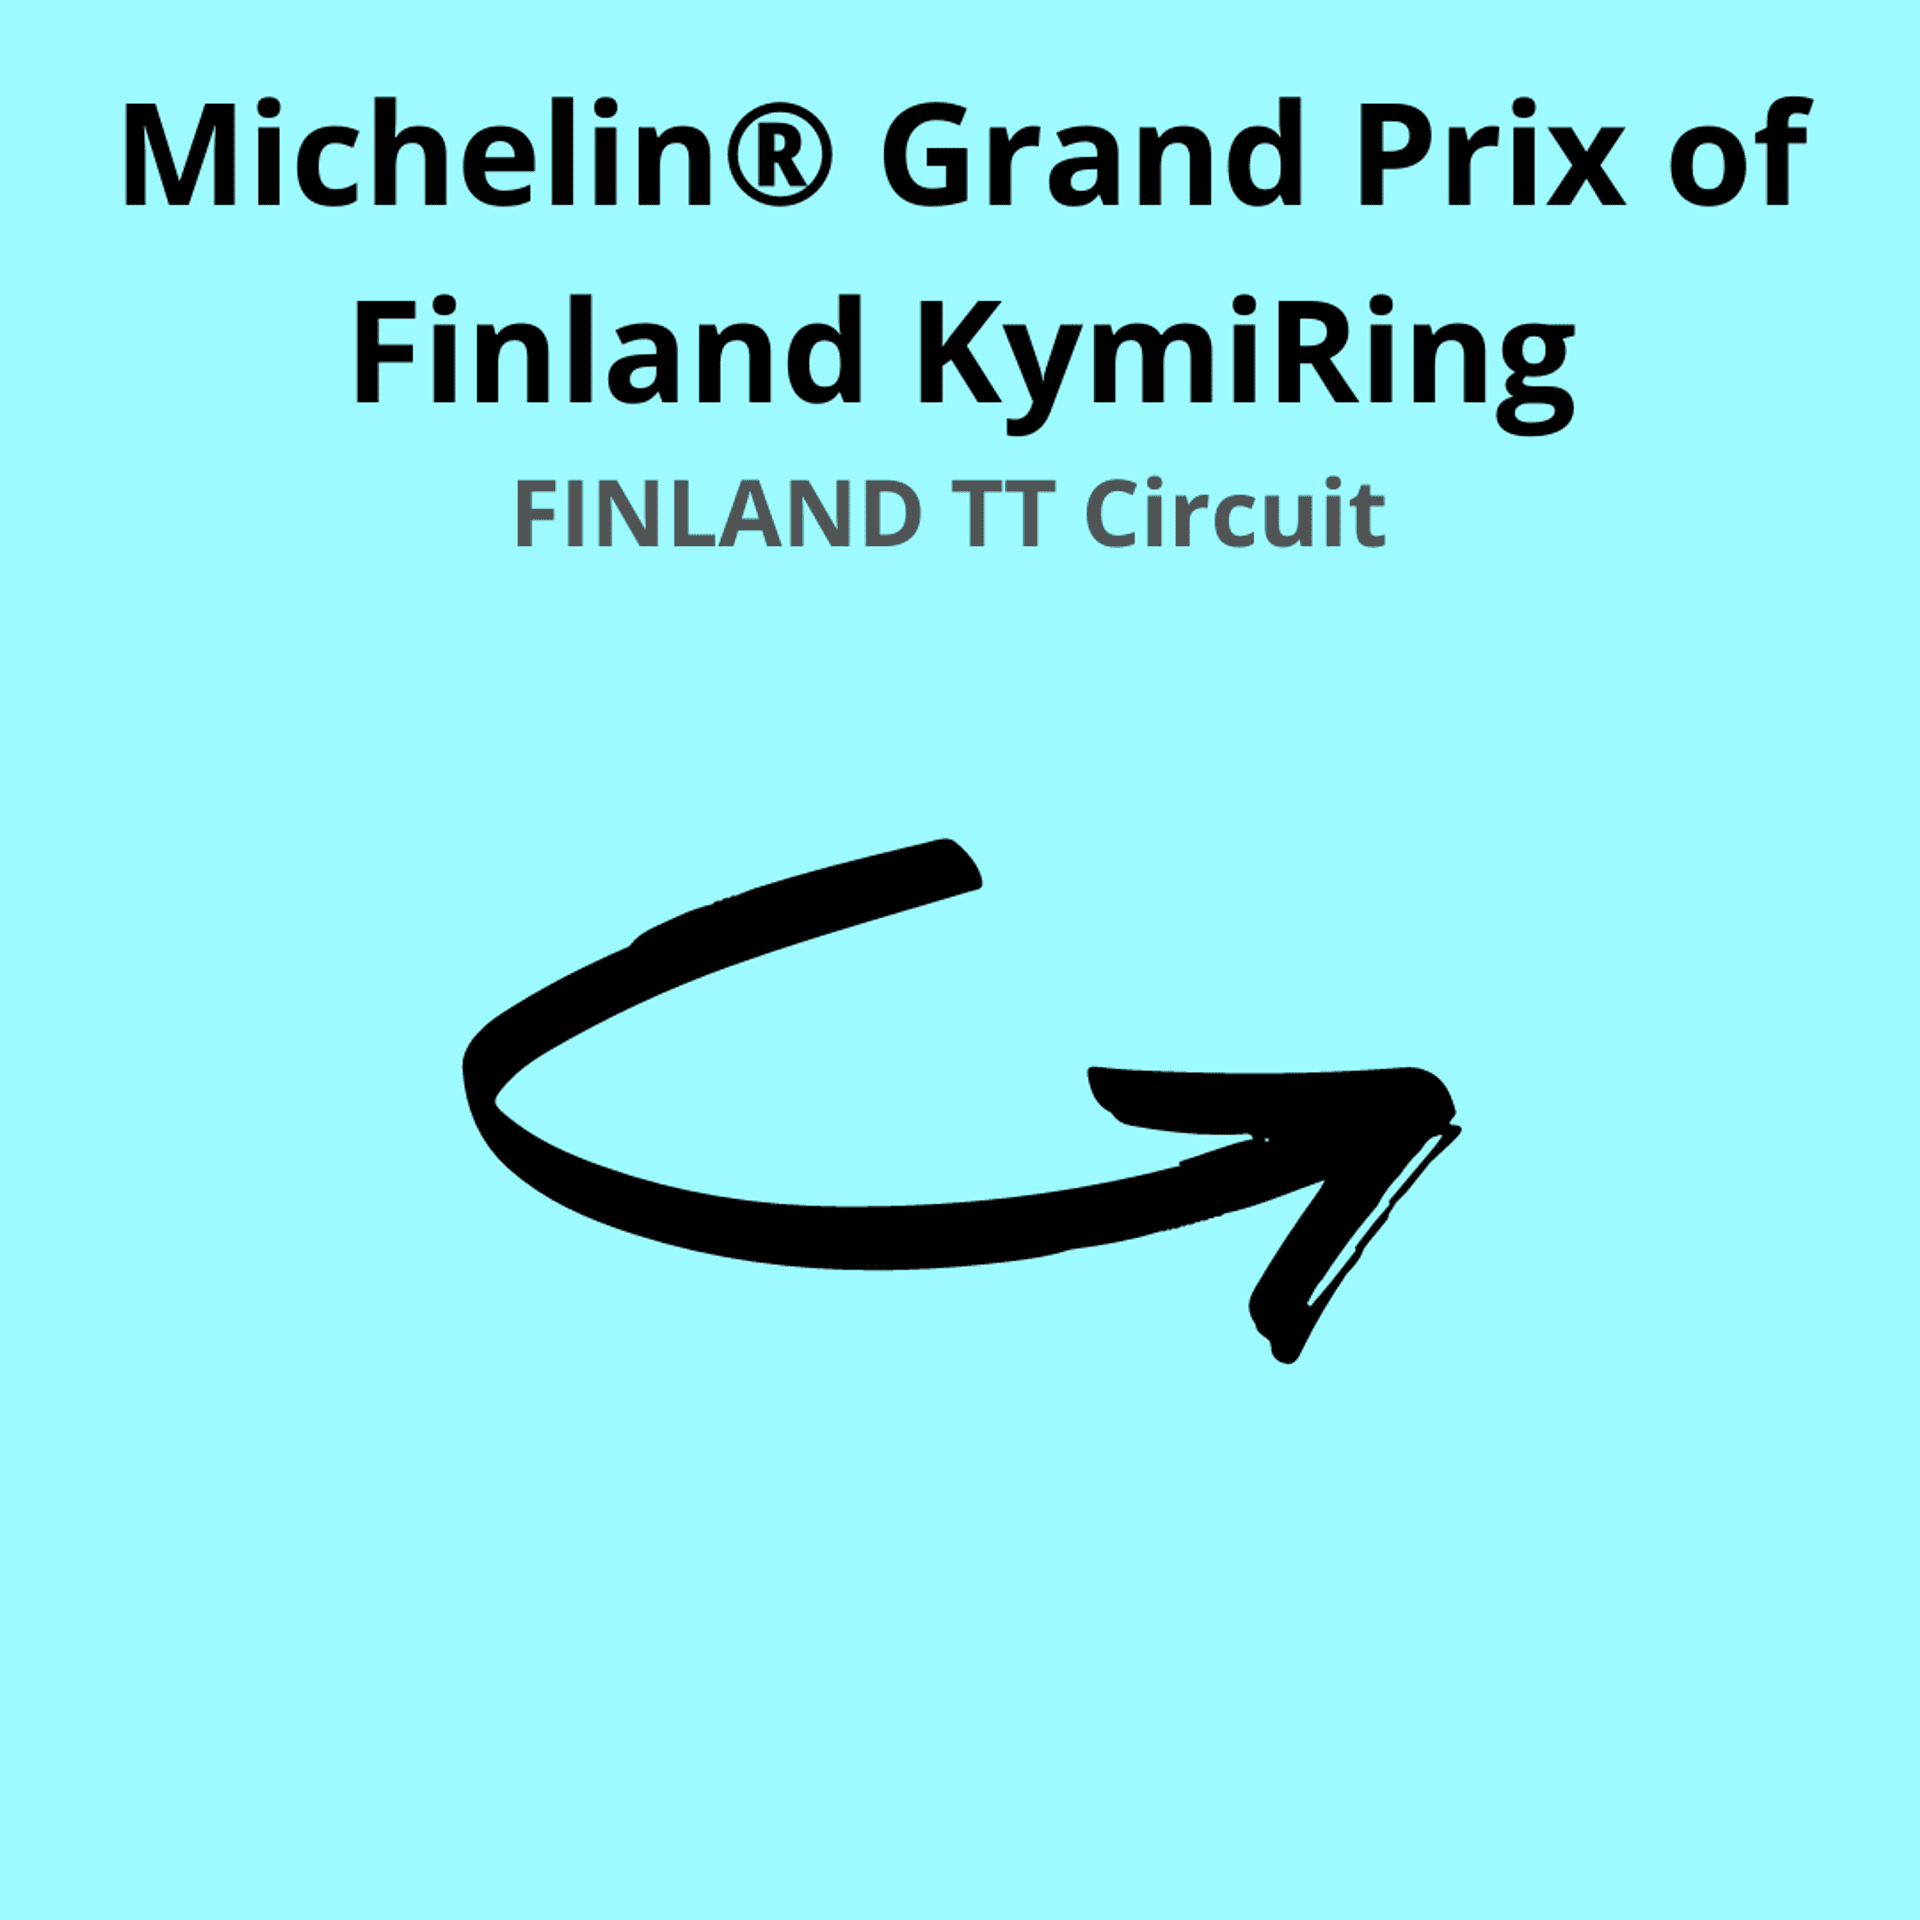 Michelin® Grand Prix of Finland KymiRing